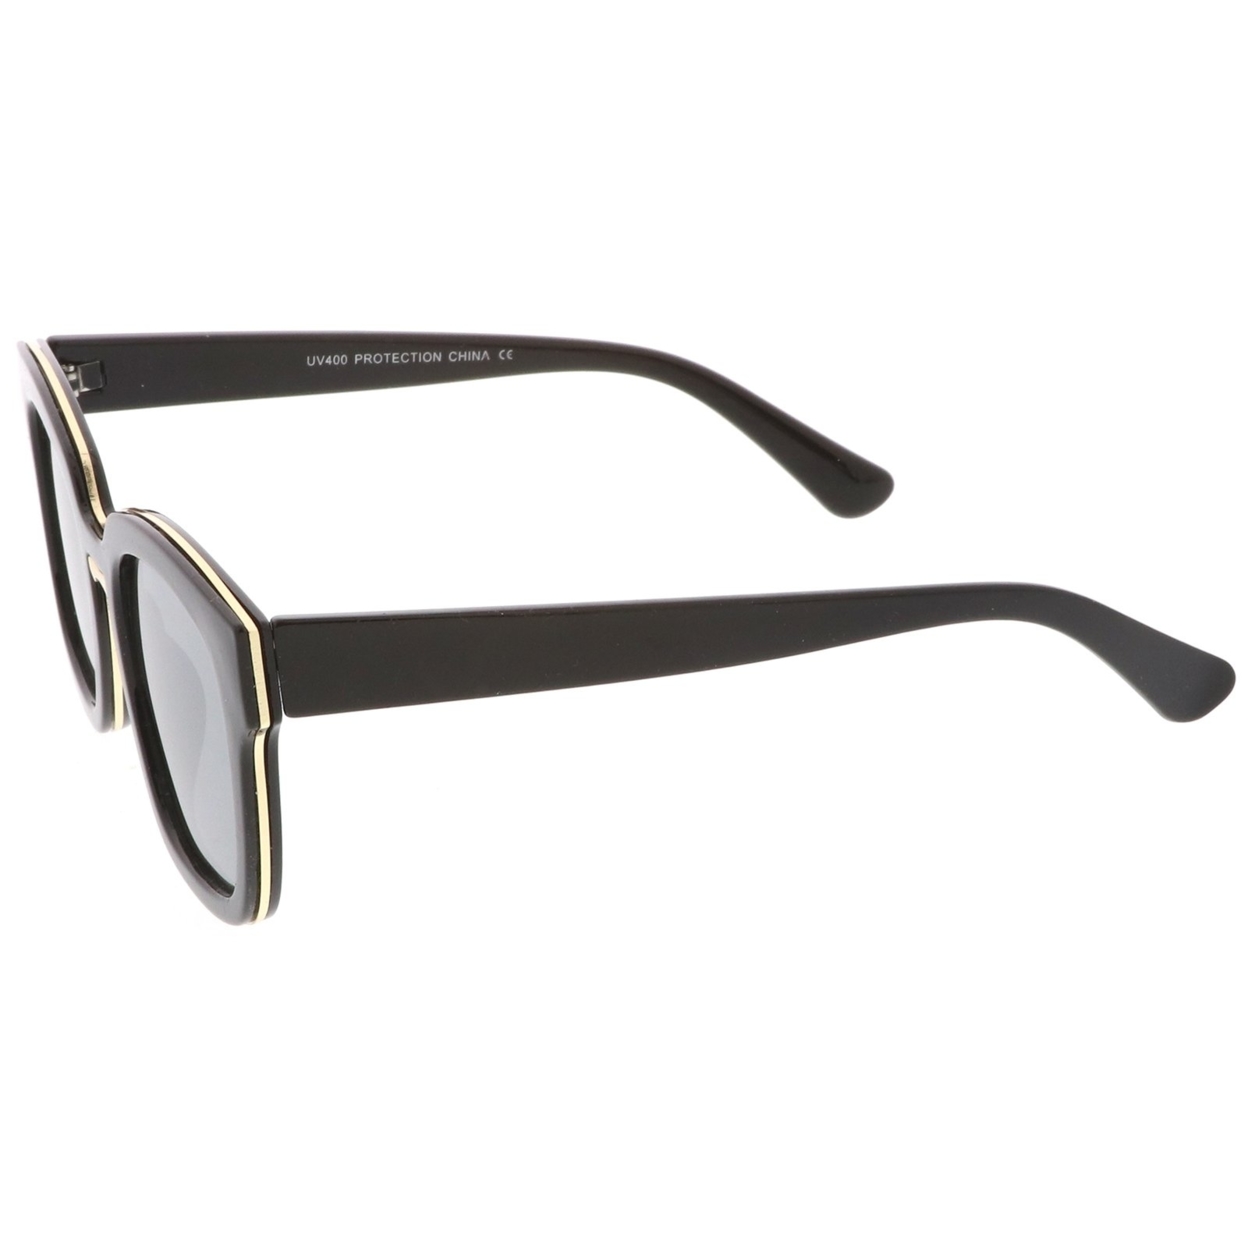 Modern Metal Trim Bridge Square Mirror Flat Lens Horn Rimmed Sunglasses 50mm - Tortoise-Gold / Blue Mirror